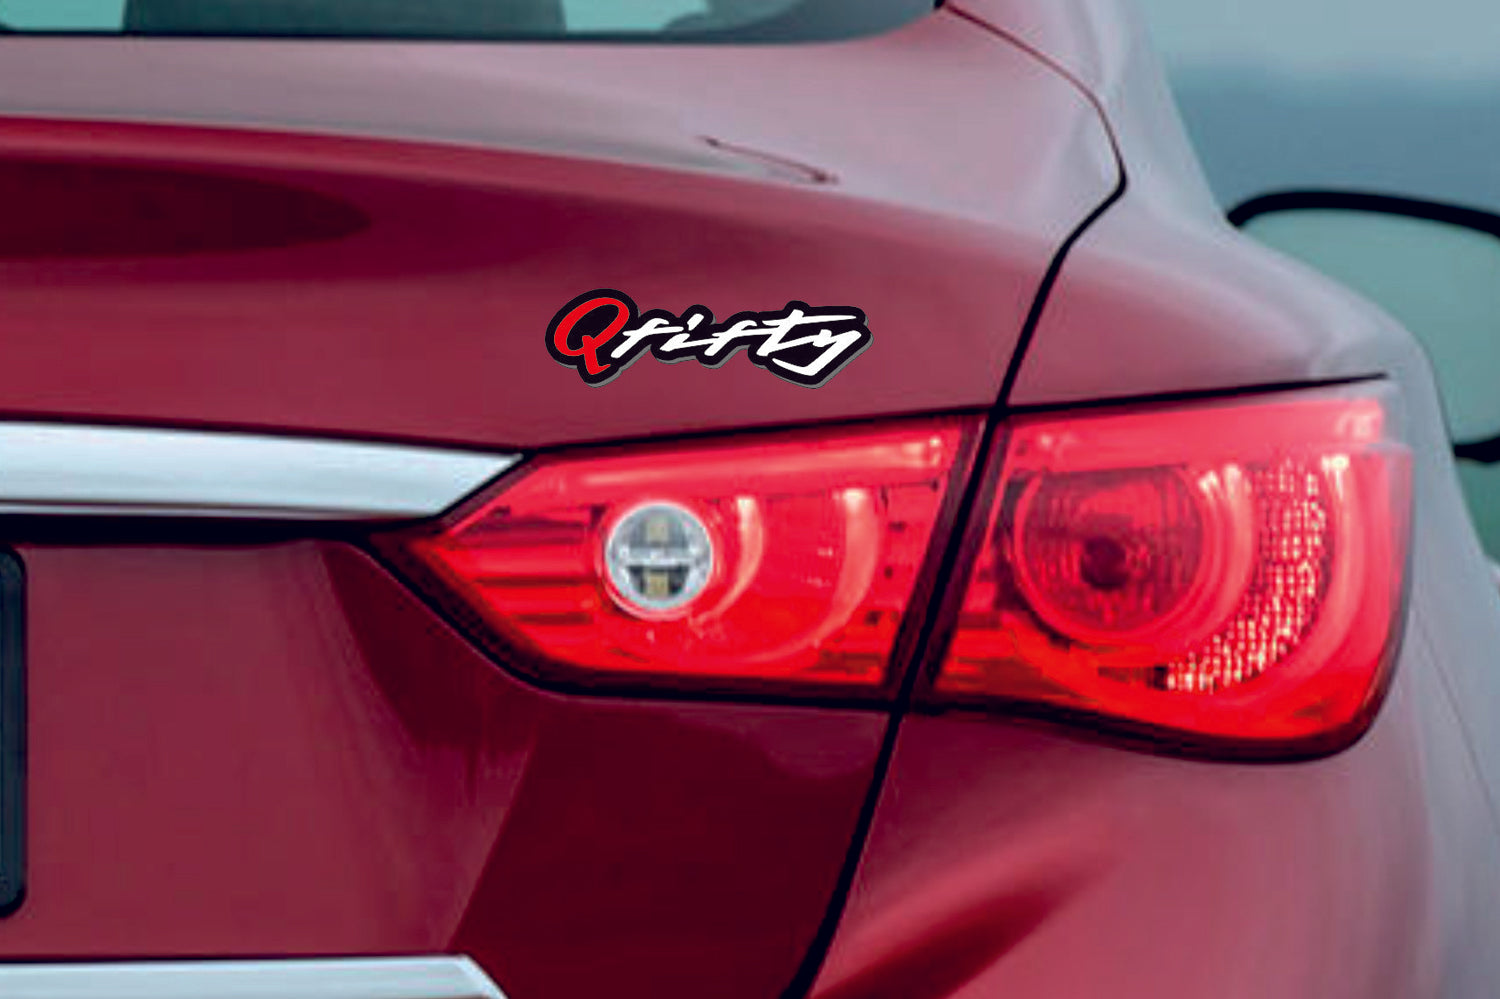 Infiniti tailgate trunk rear emblem with Q50 logo